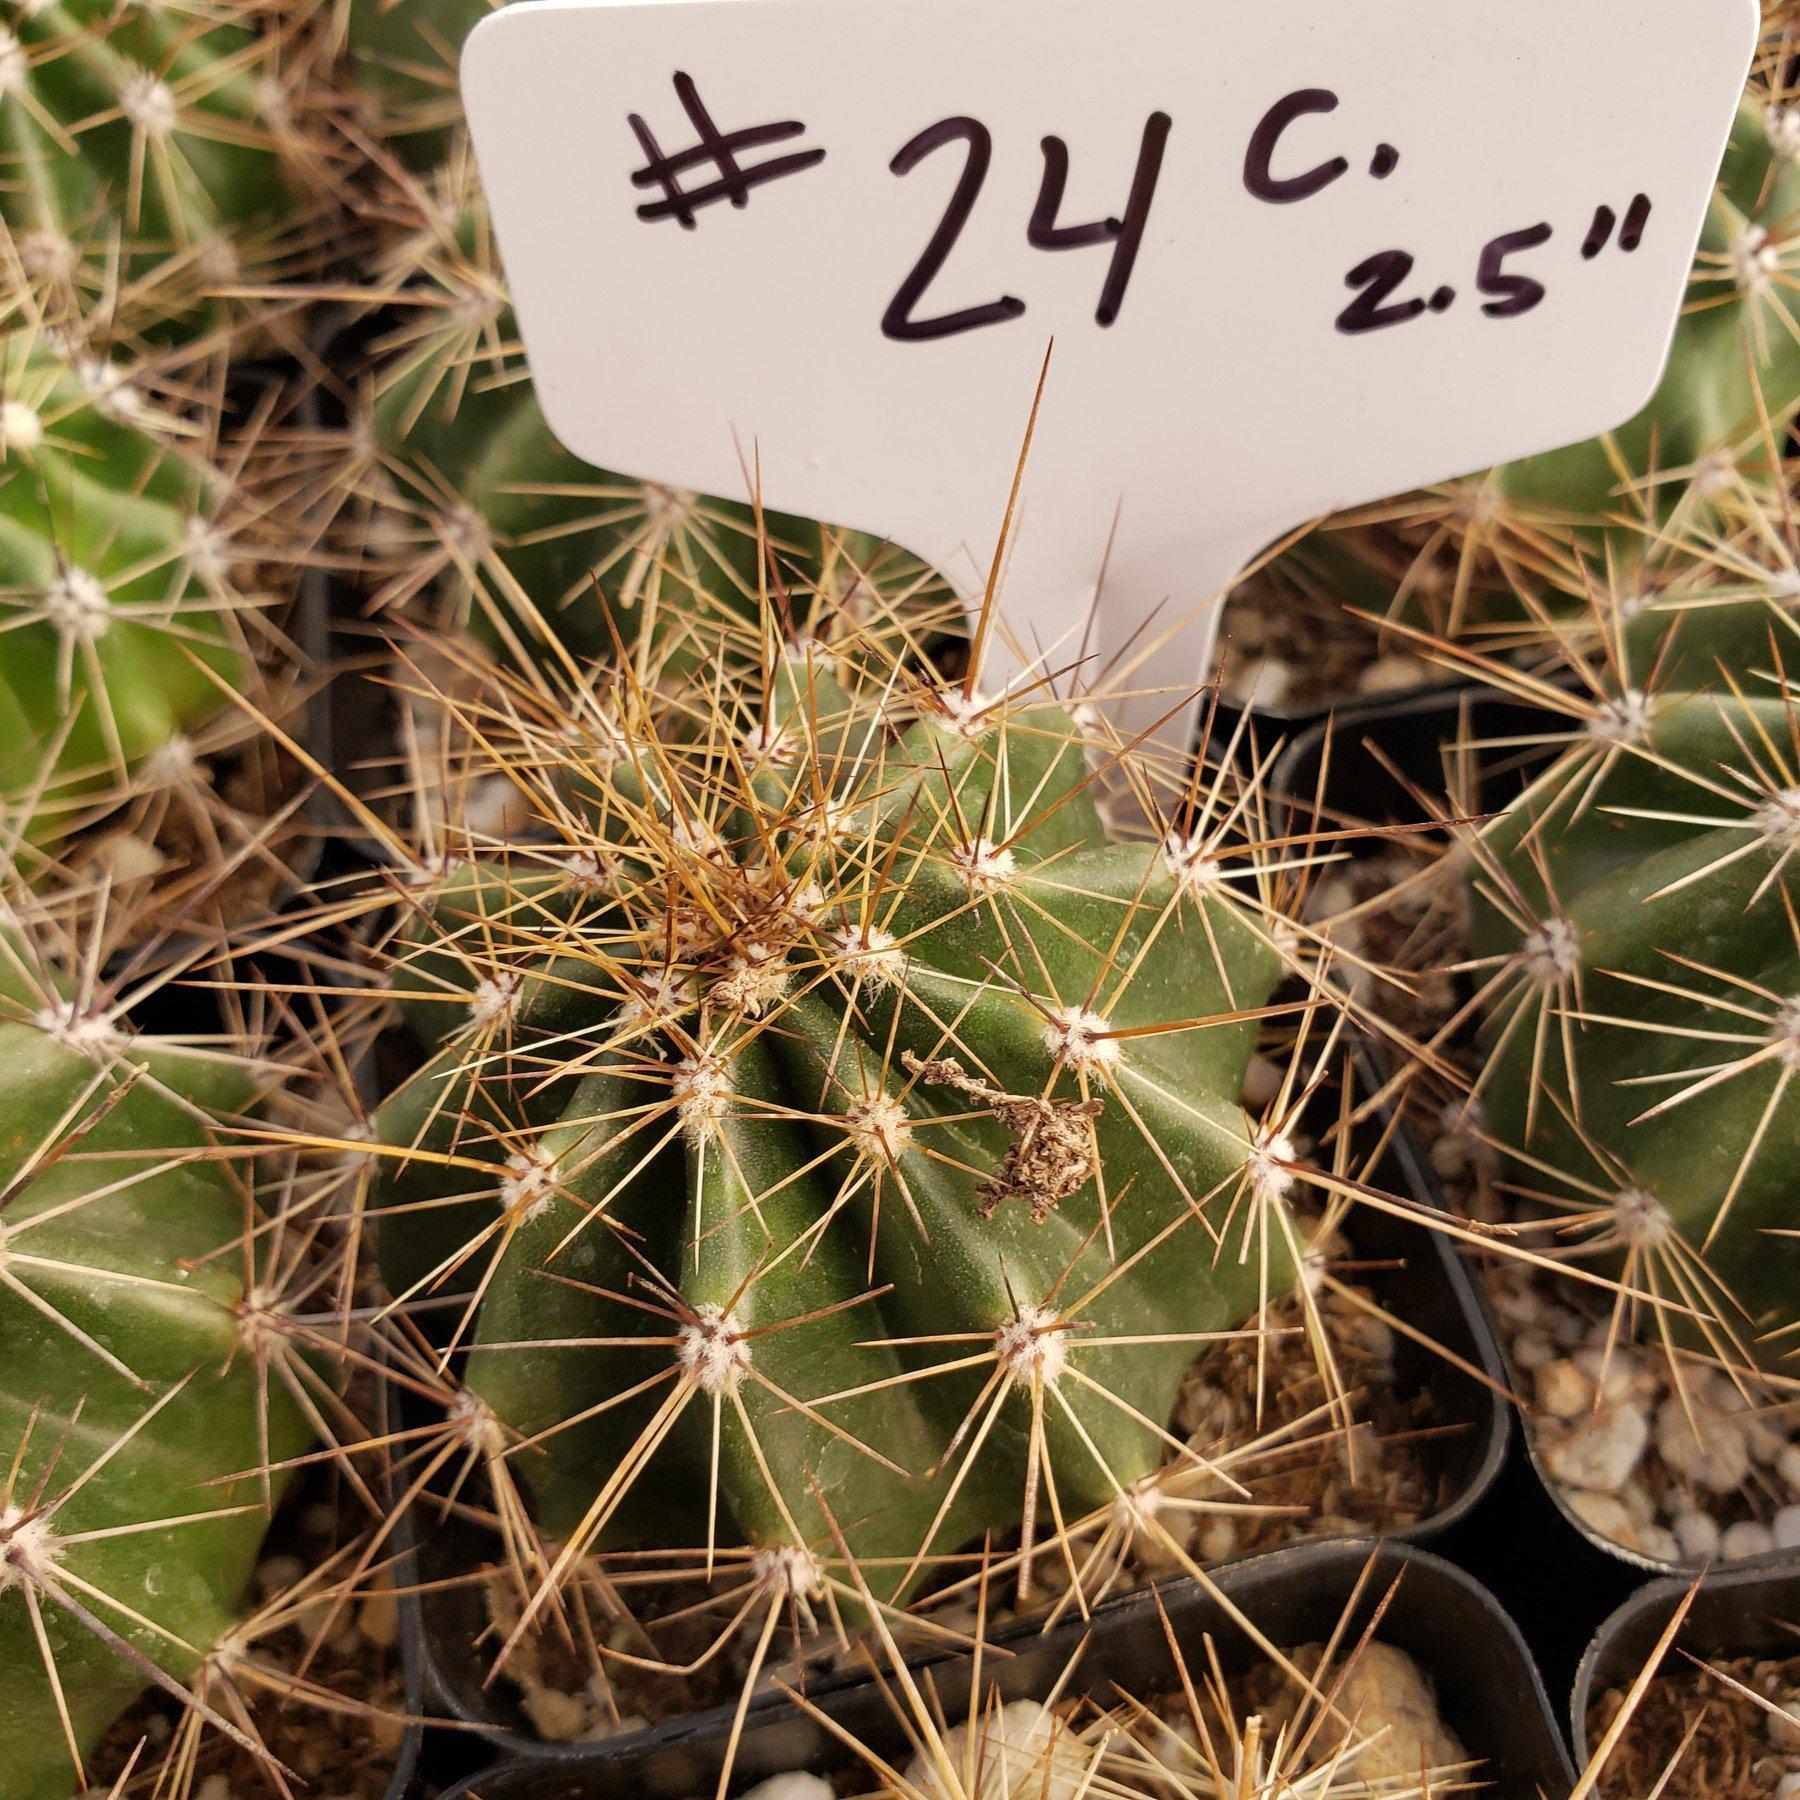 #24C 2.5"-Cactus - Small - Exact Type-The Succulent Source